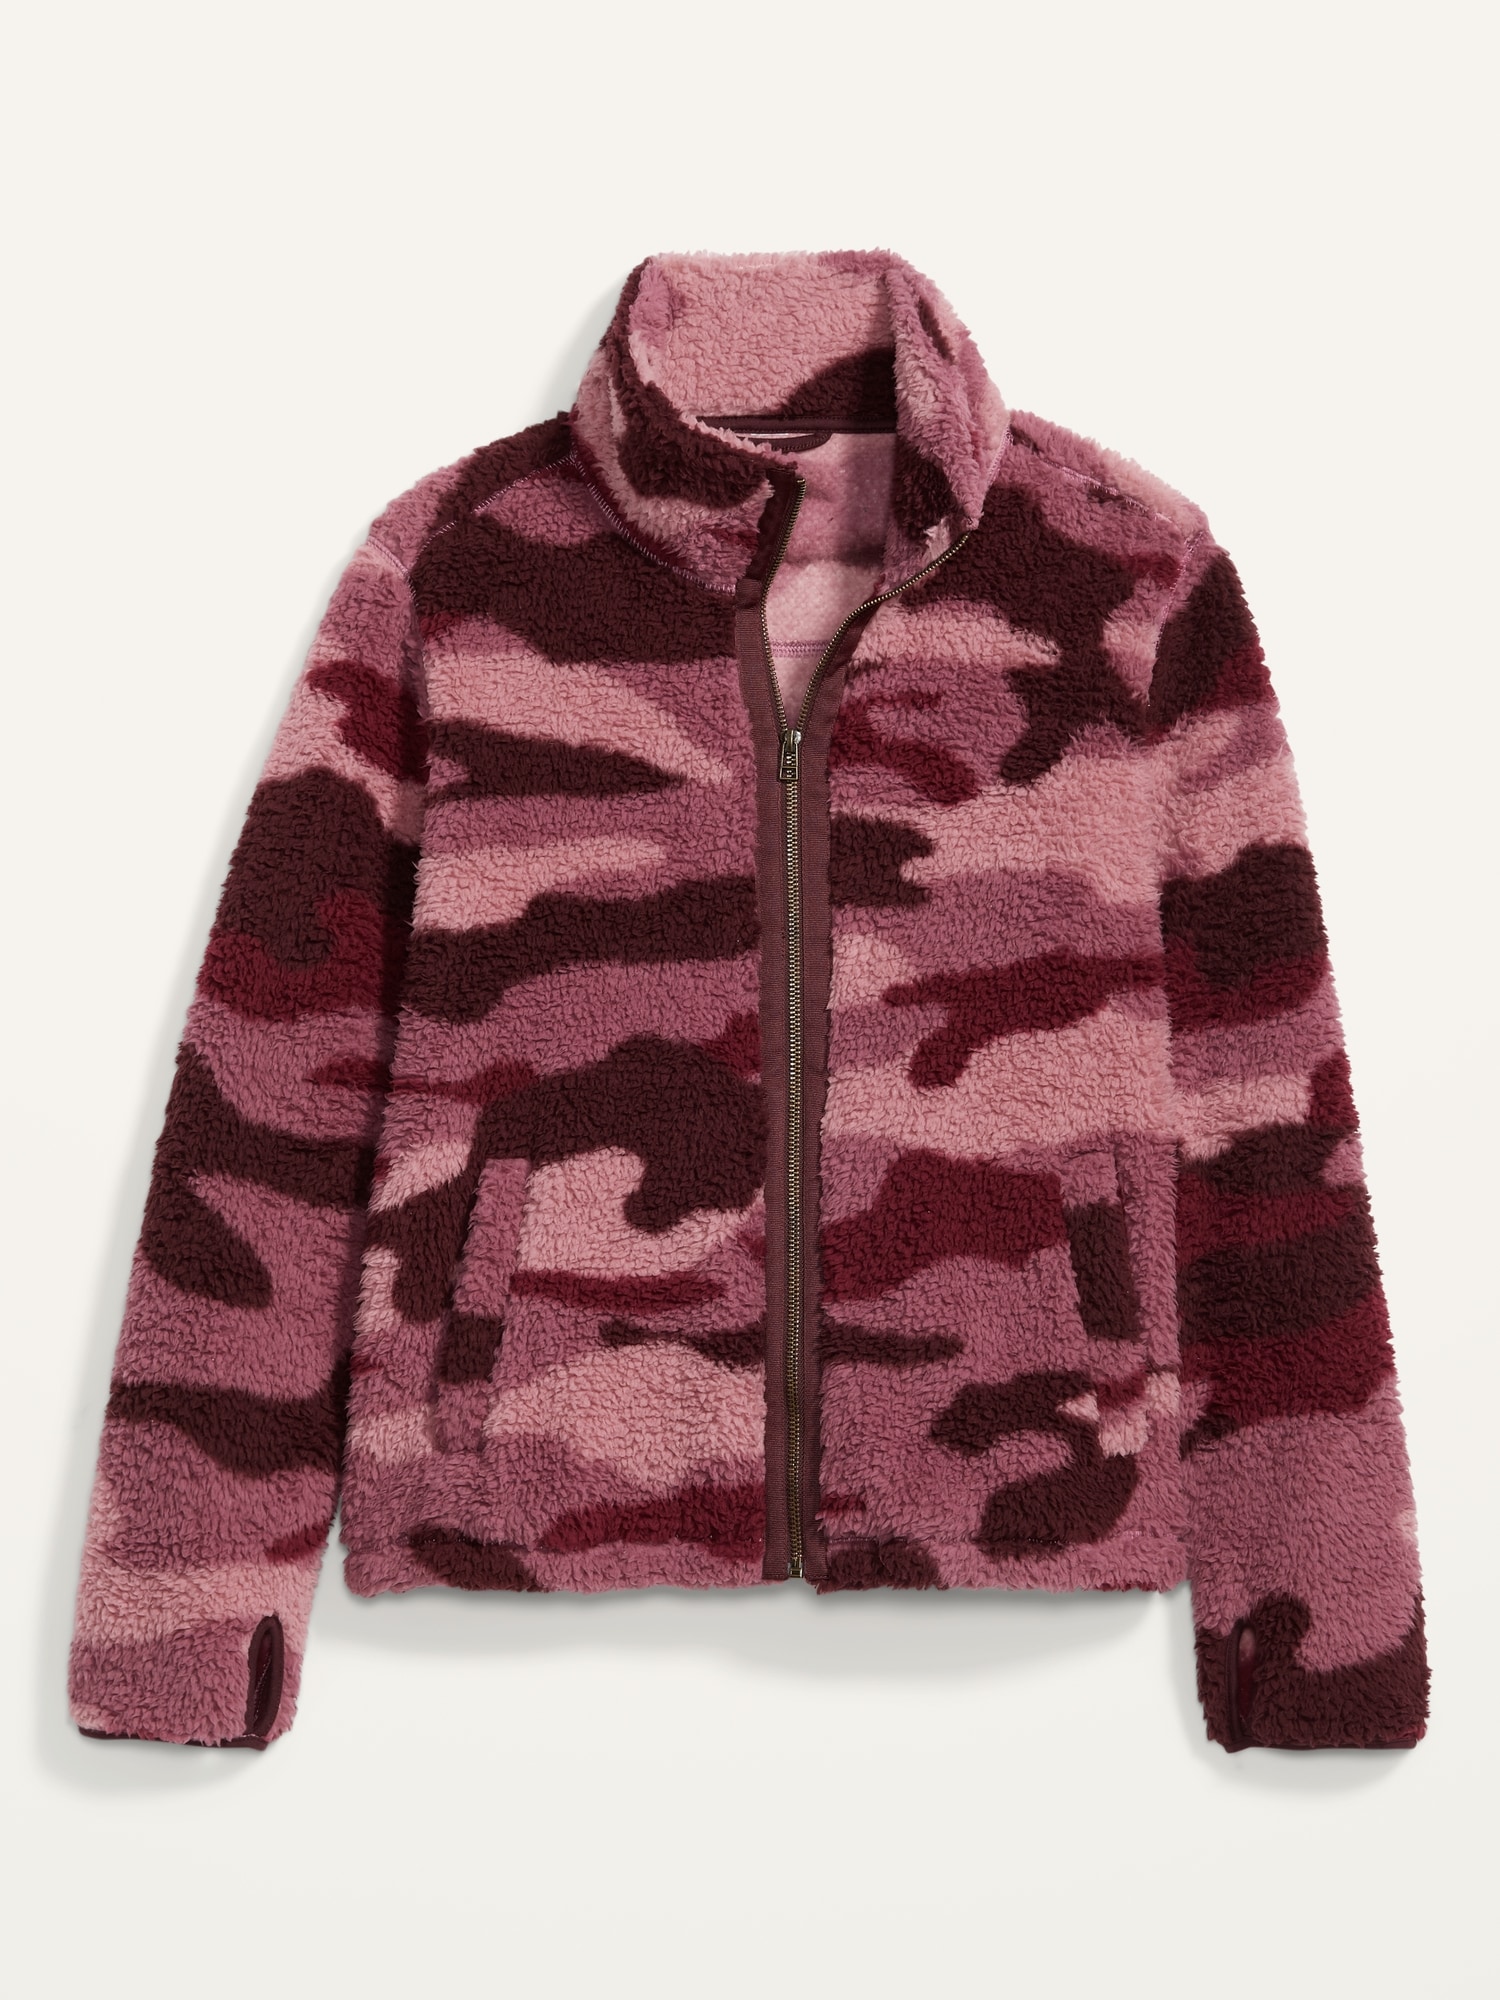 Cozy Sherpa Jacket, Umber Pink Sherpa Jacket